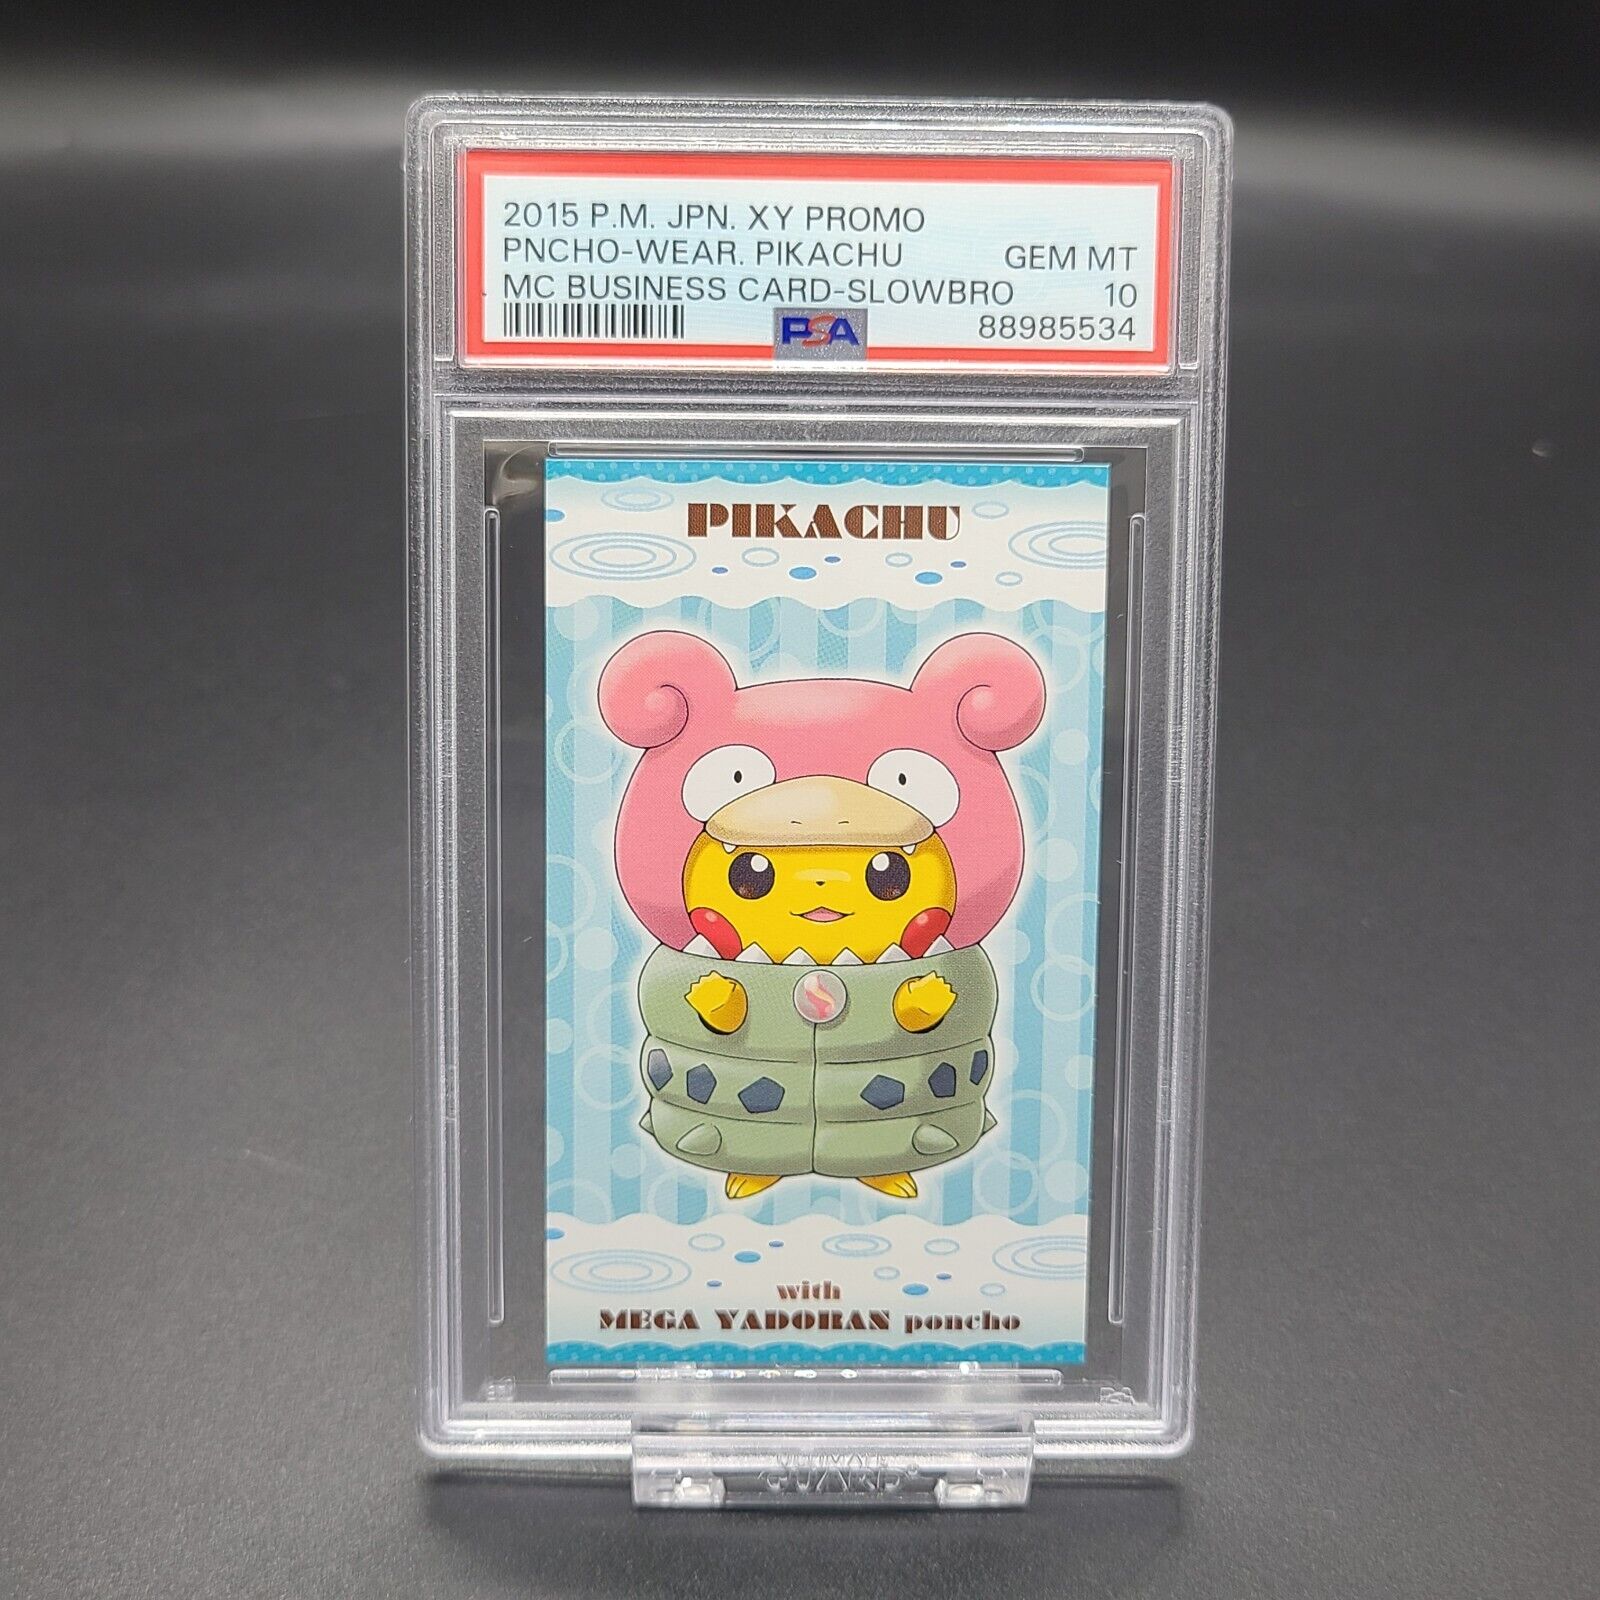 PSA10 Poncho Wear Pikachu Slowbro Pokemon Japanese Promo MC Business Card 2015